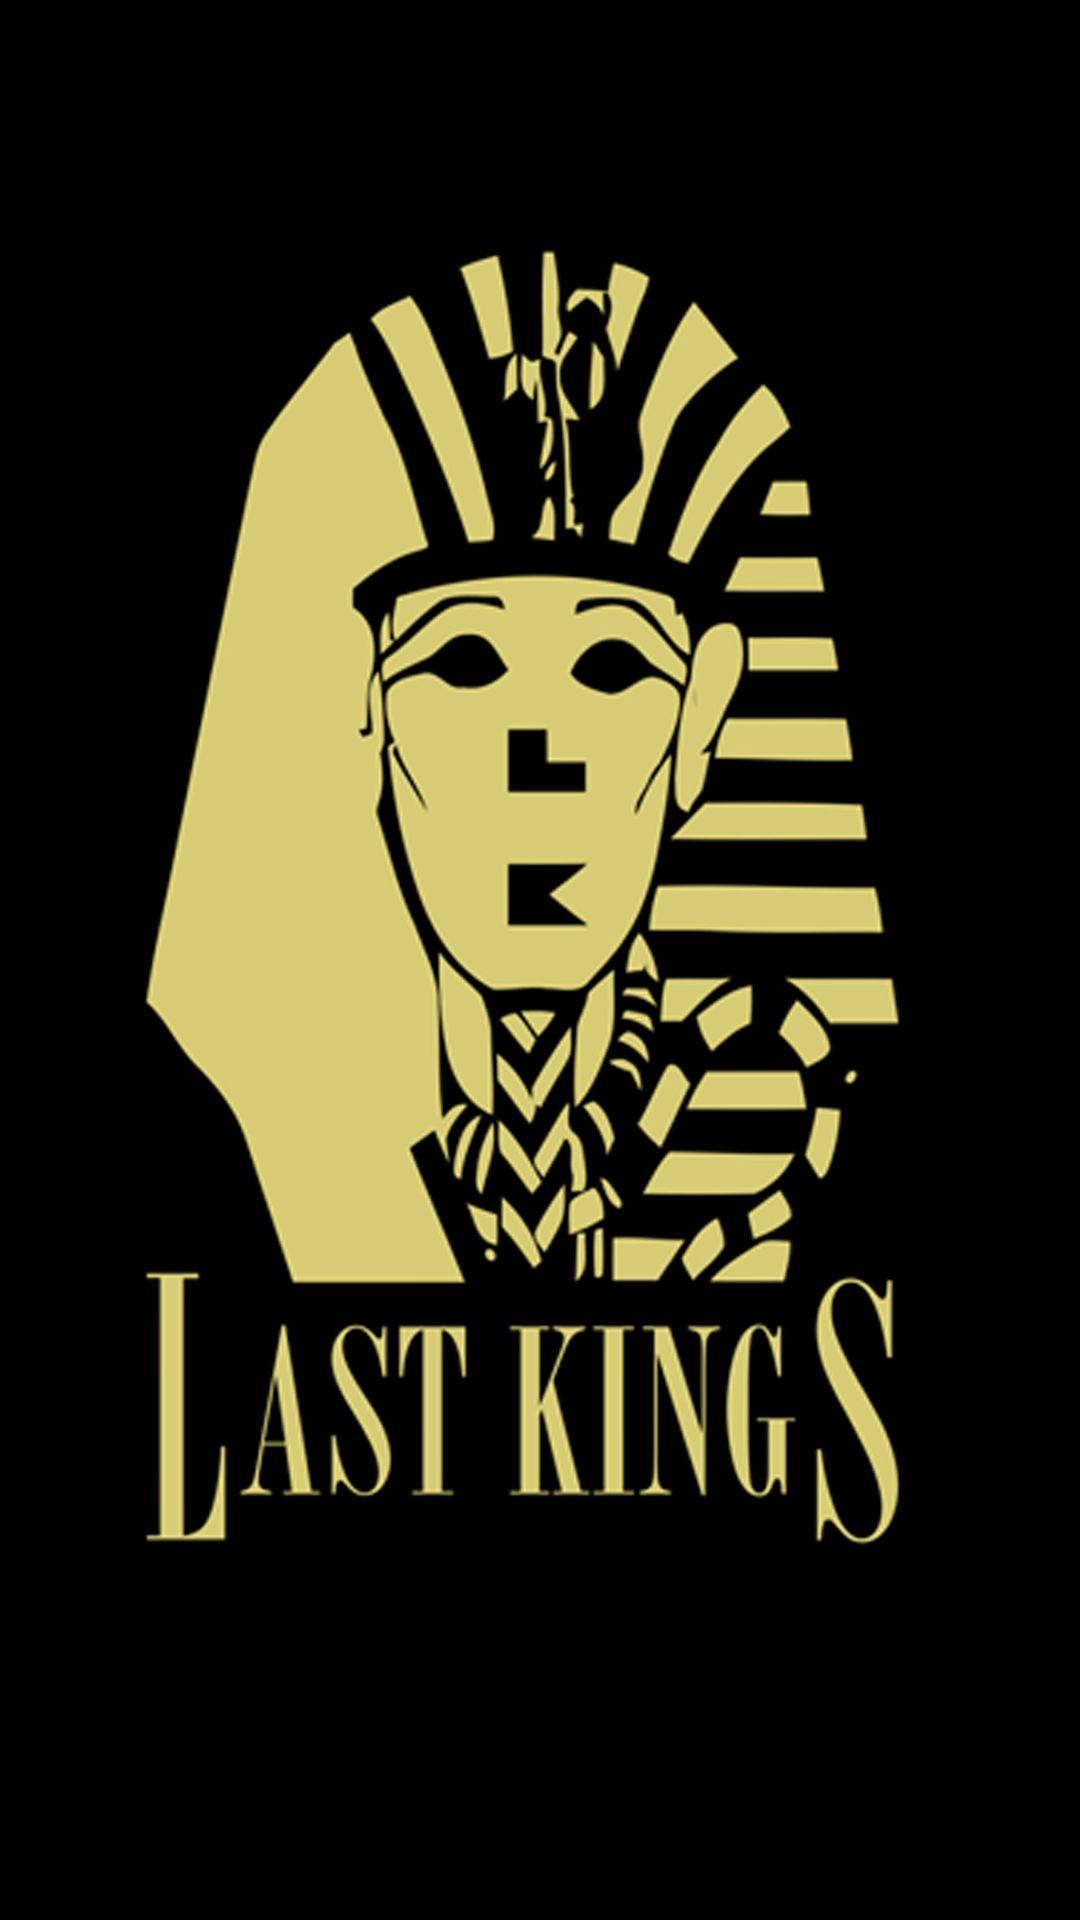 Artistic Last King Wallpaper Download in HD 1080p. HD Wallpaper